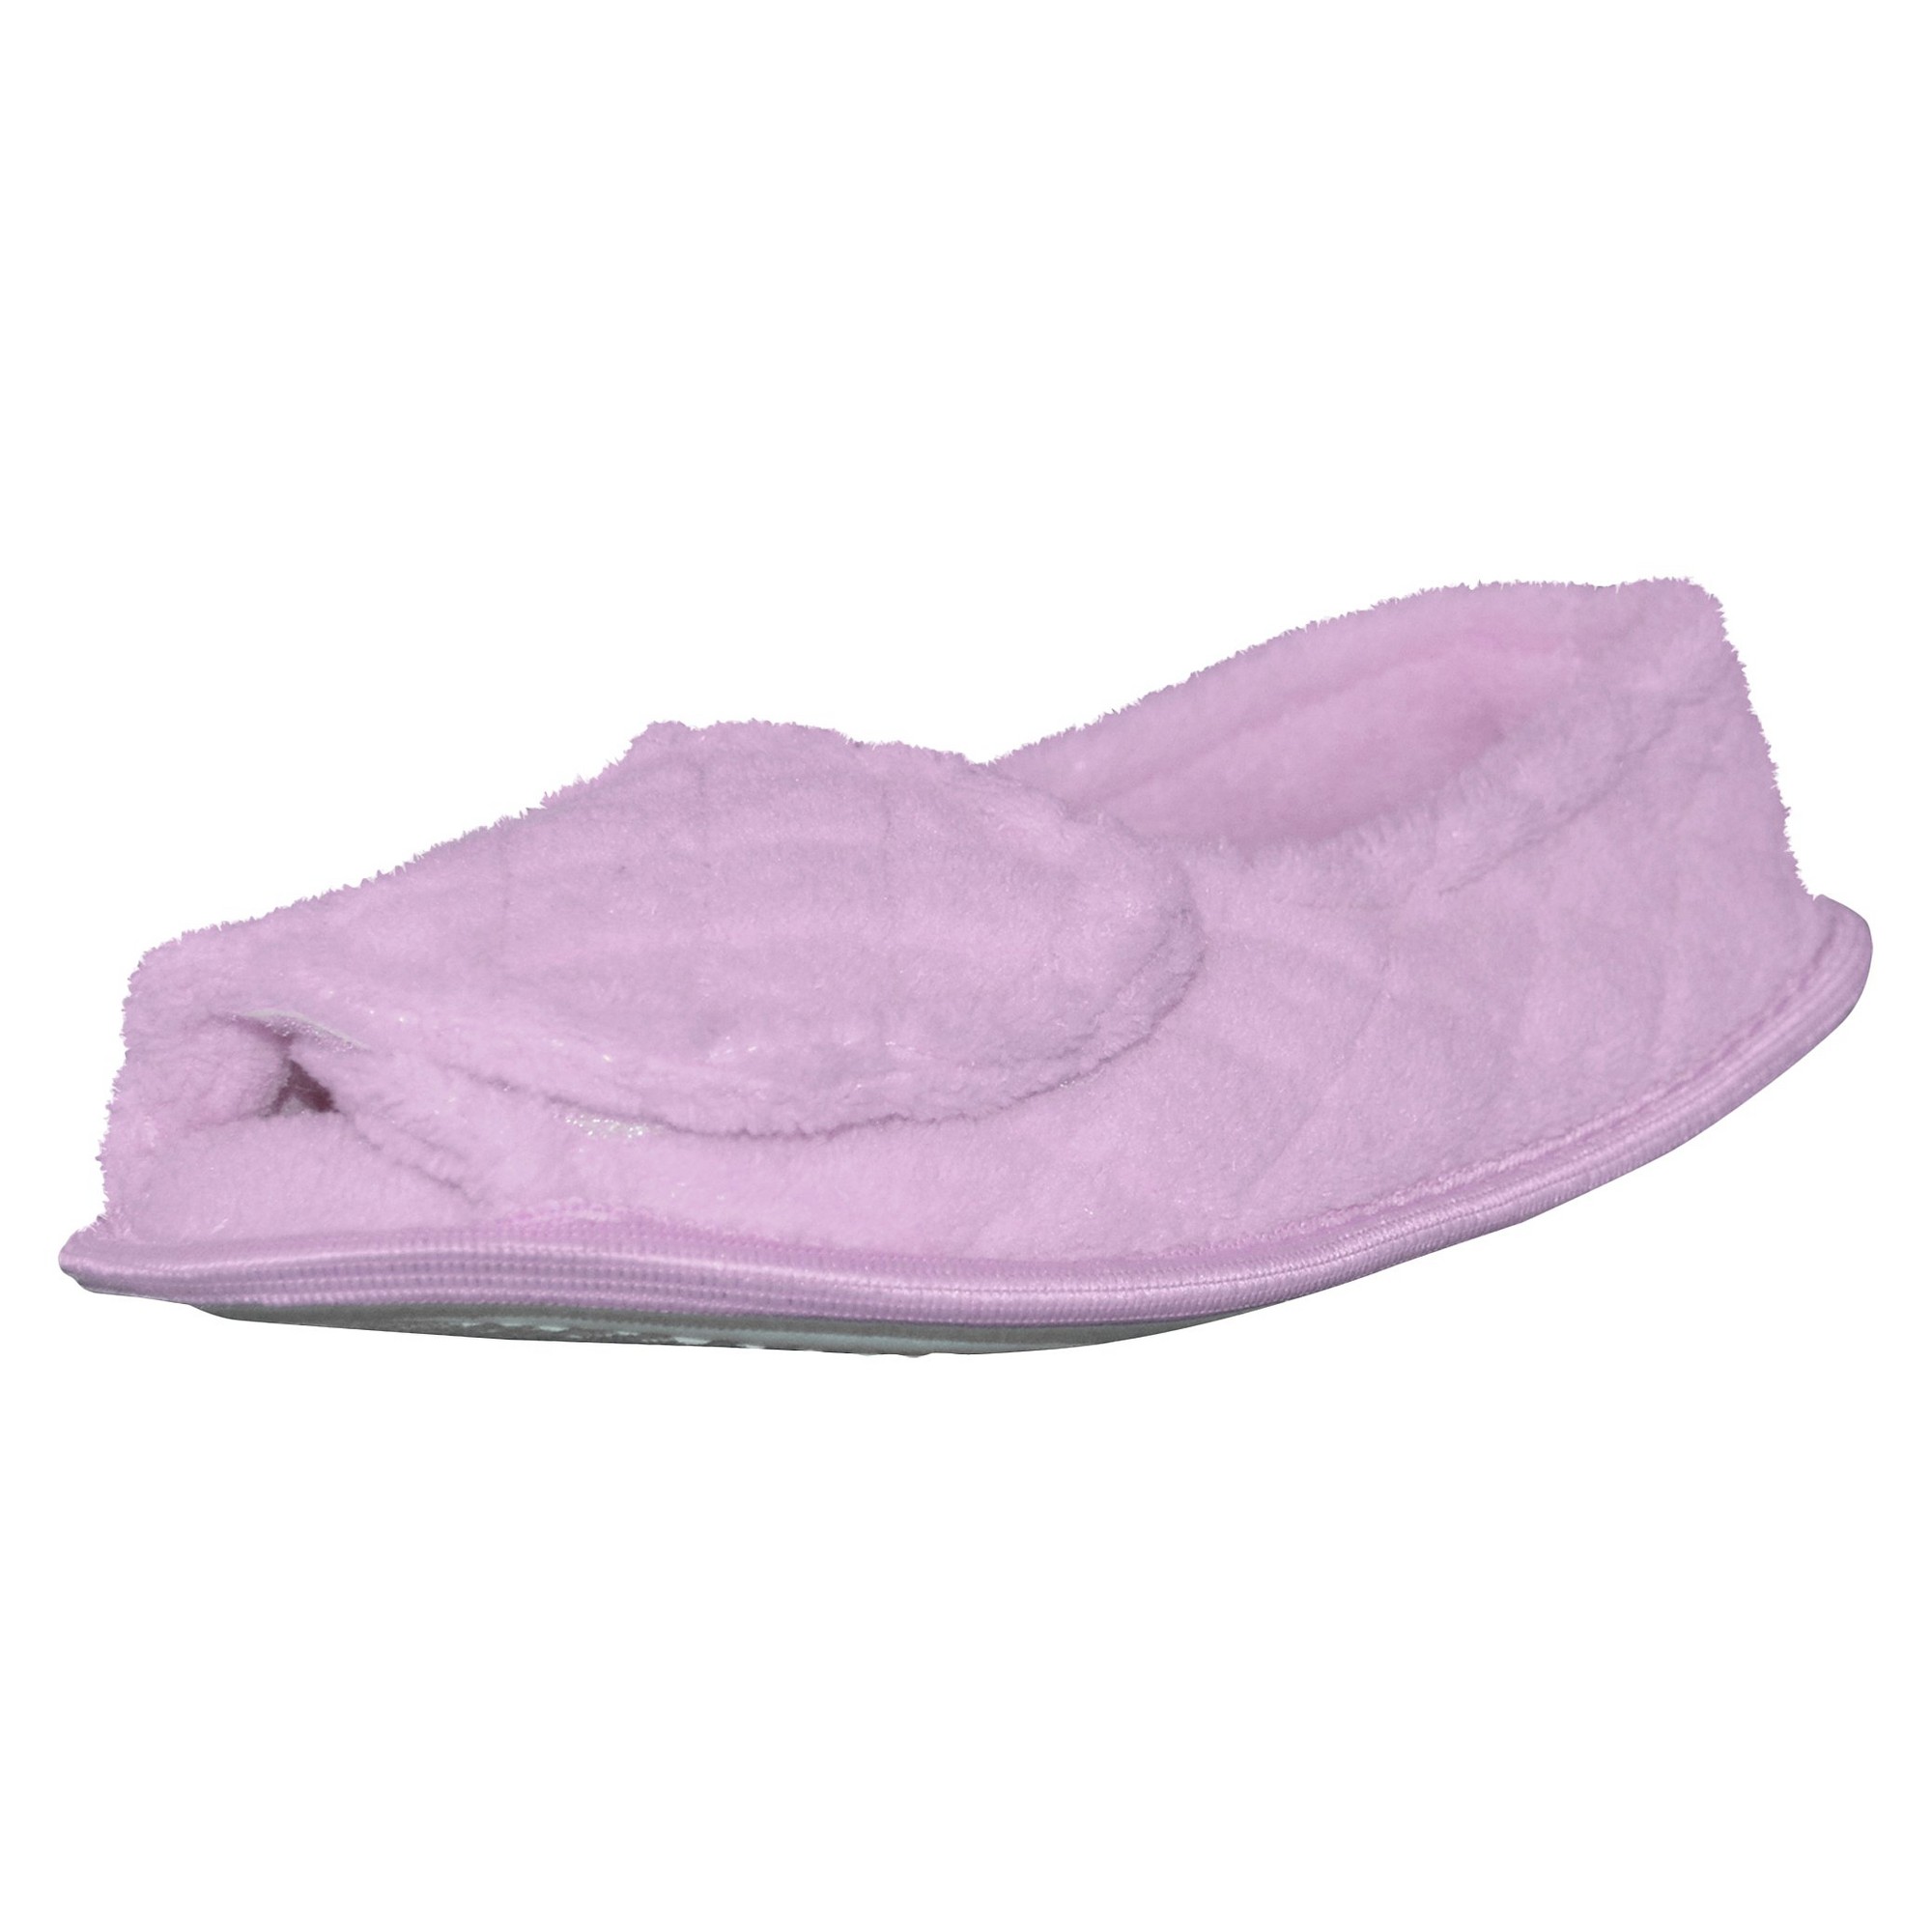 Women's MUK LUKS Micro Chenille Slippers - Lavender XL(9-10), Size: XL (9-10), Purple